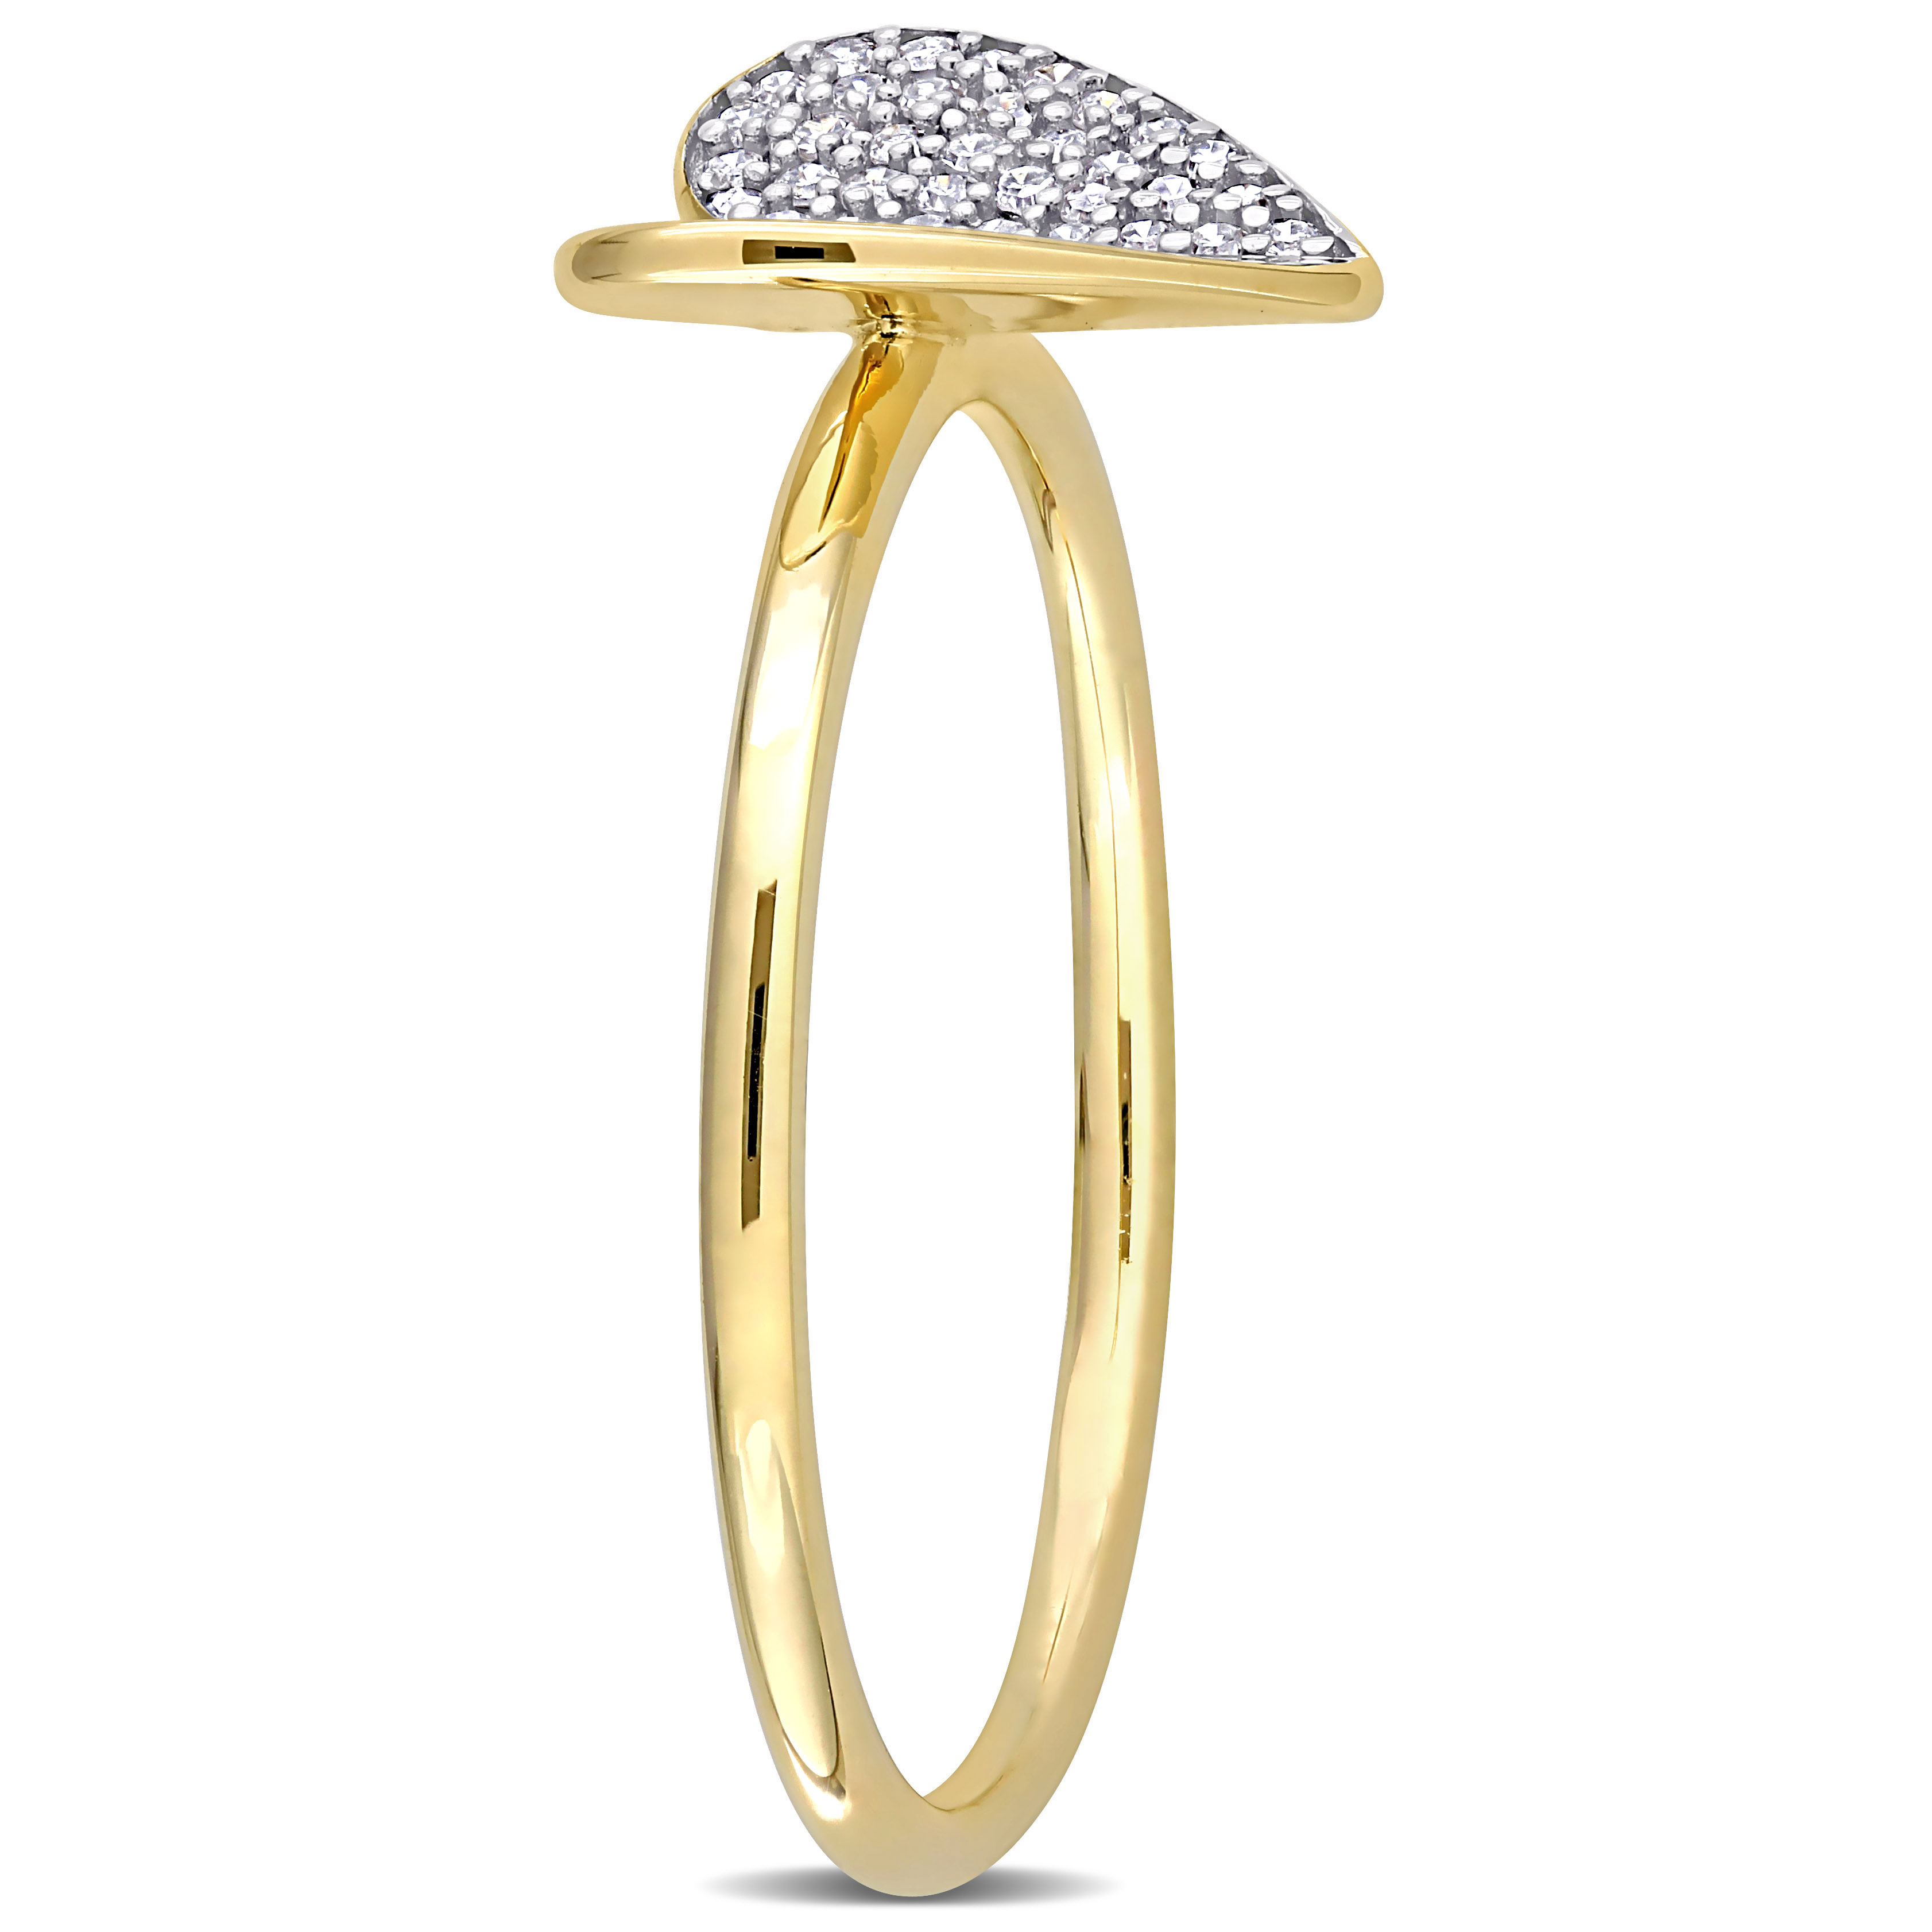 1/10 CT TDW Diamond Heart Ring in 10k Yellow Gold